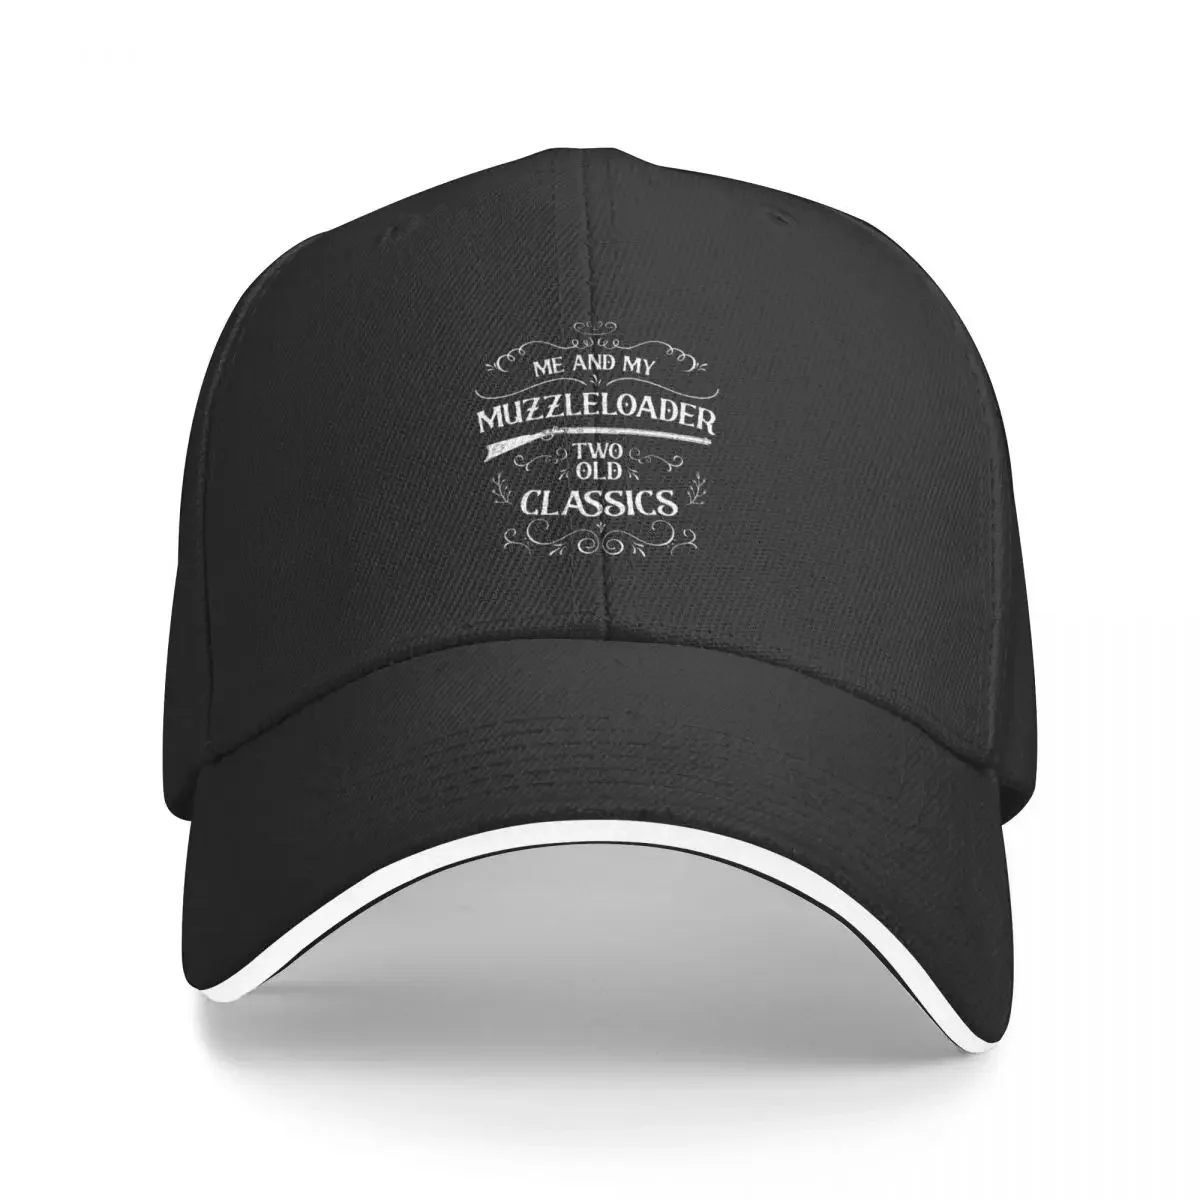 

Muzzleloader Black Powder Classics Baseball Cap Hood Hat Man For The Sun Rave Trucker Hats For Men Women's